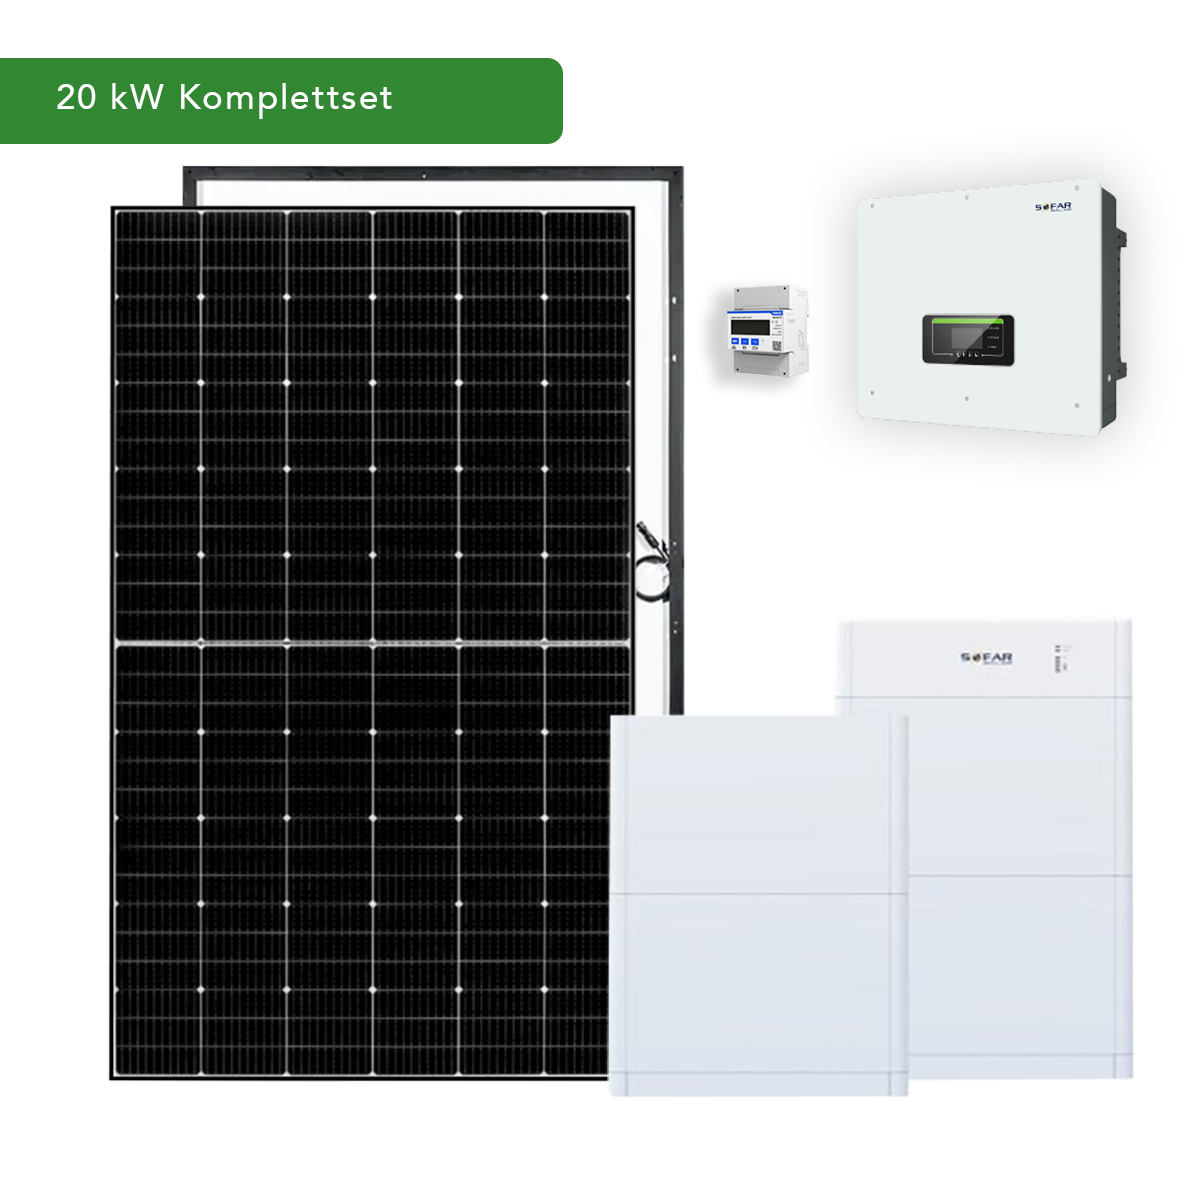 Sofar Solar 20 kW PV-Komplettset mit Notstromfunktion